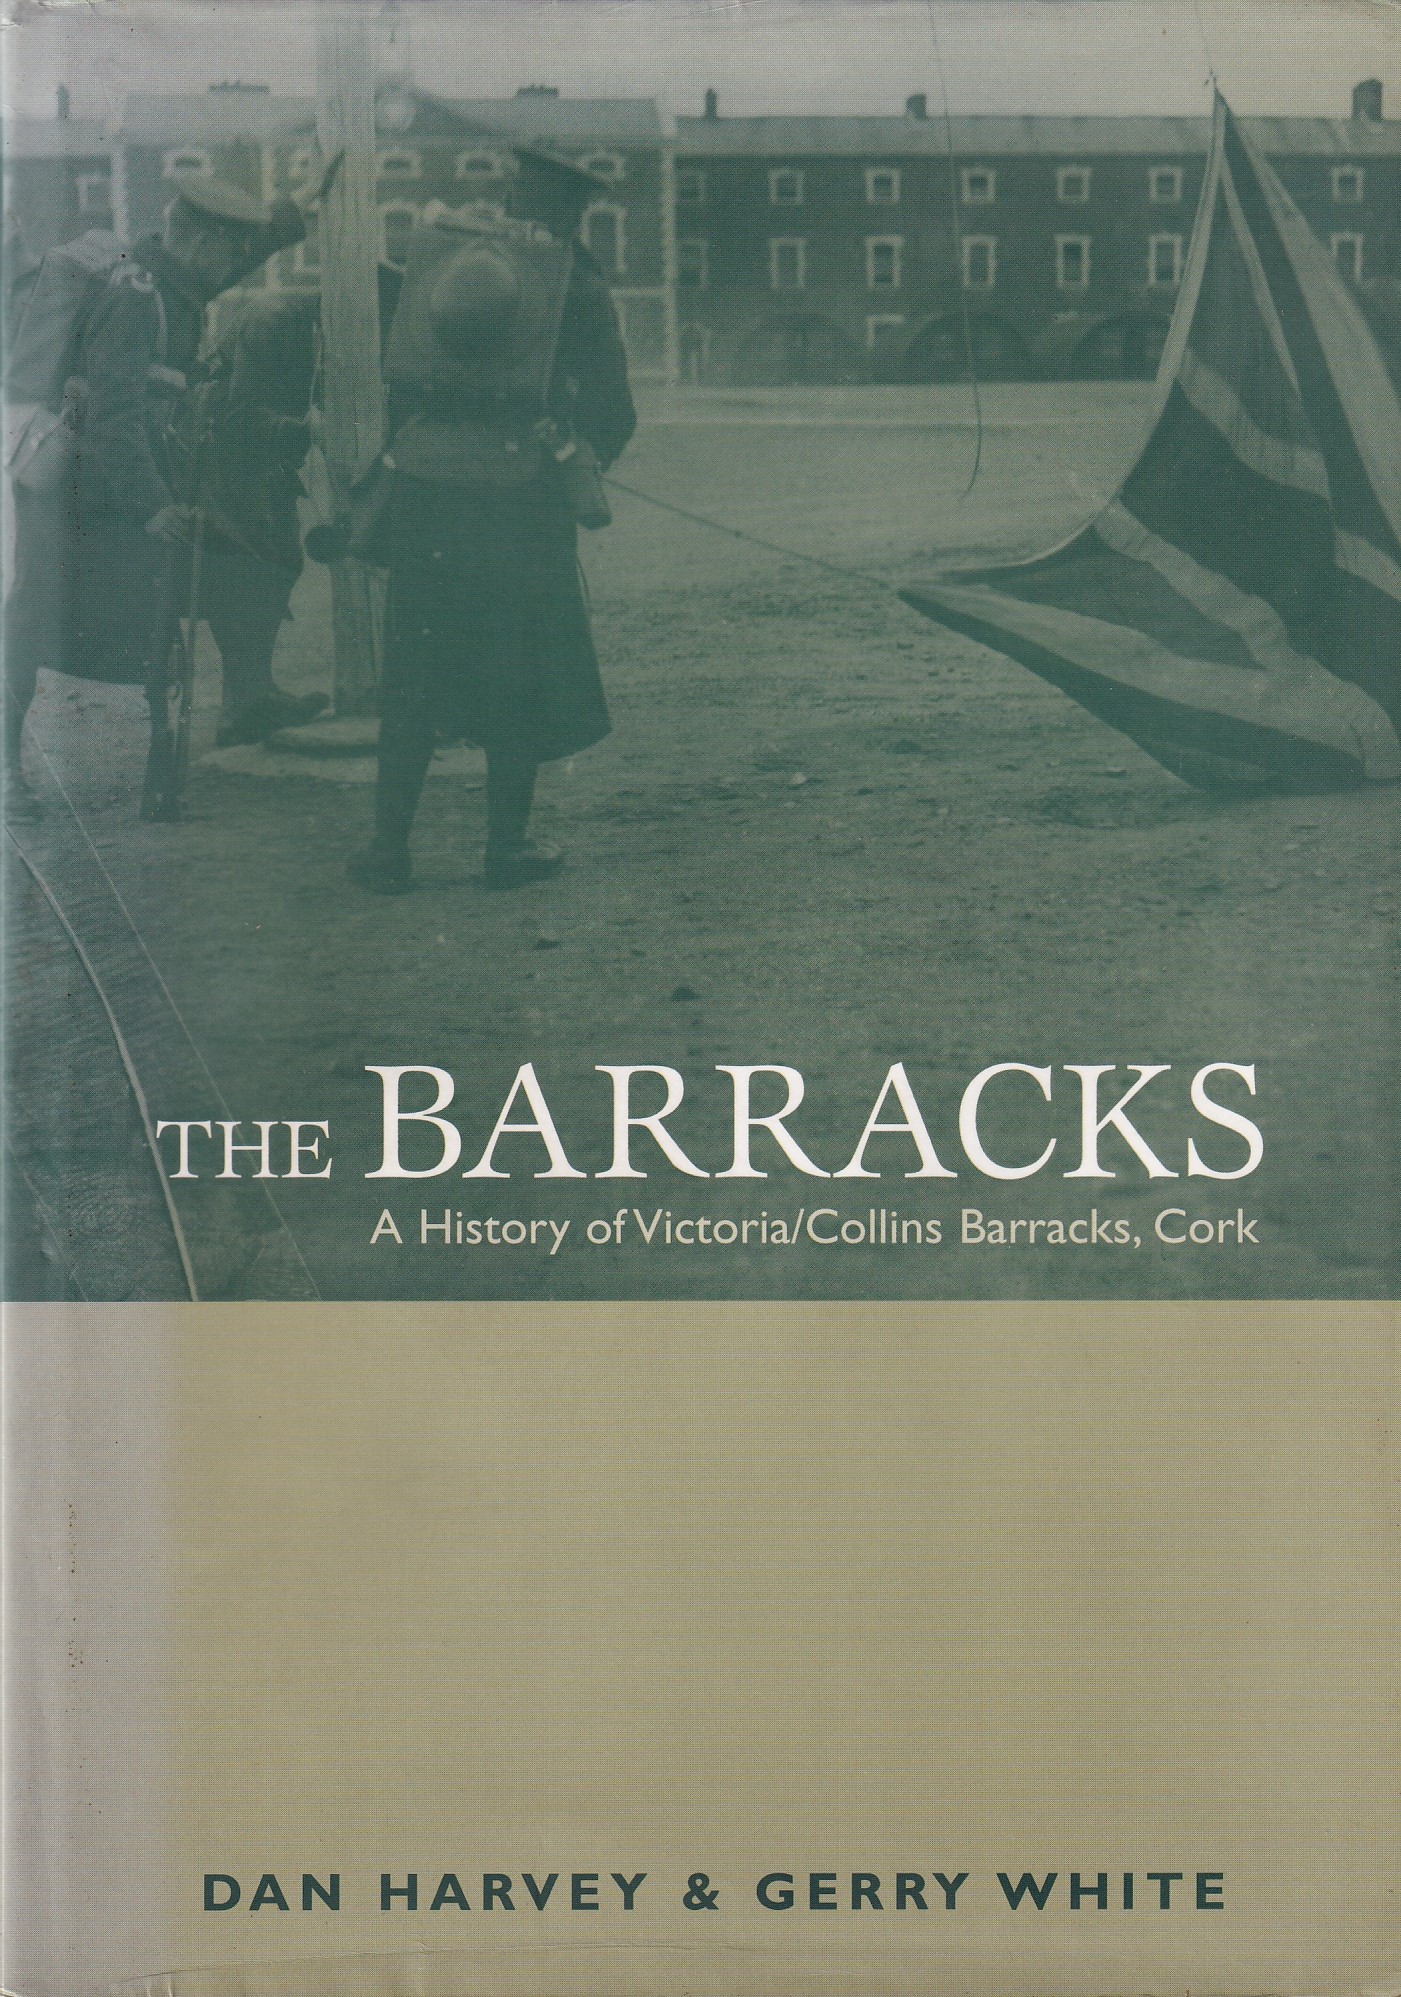 The Barracks: The History of Victoria/Collins Barracks, Cork | Dan Harvey & Gerry White | Charlie Byrne's